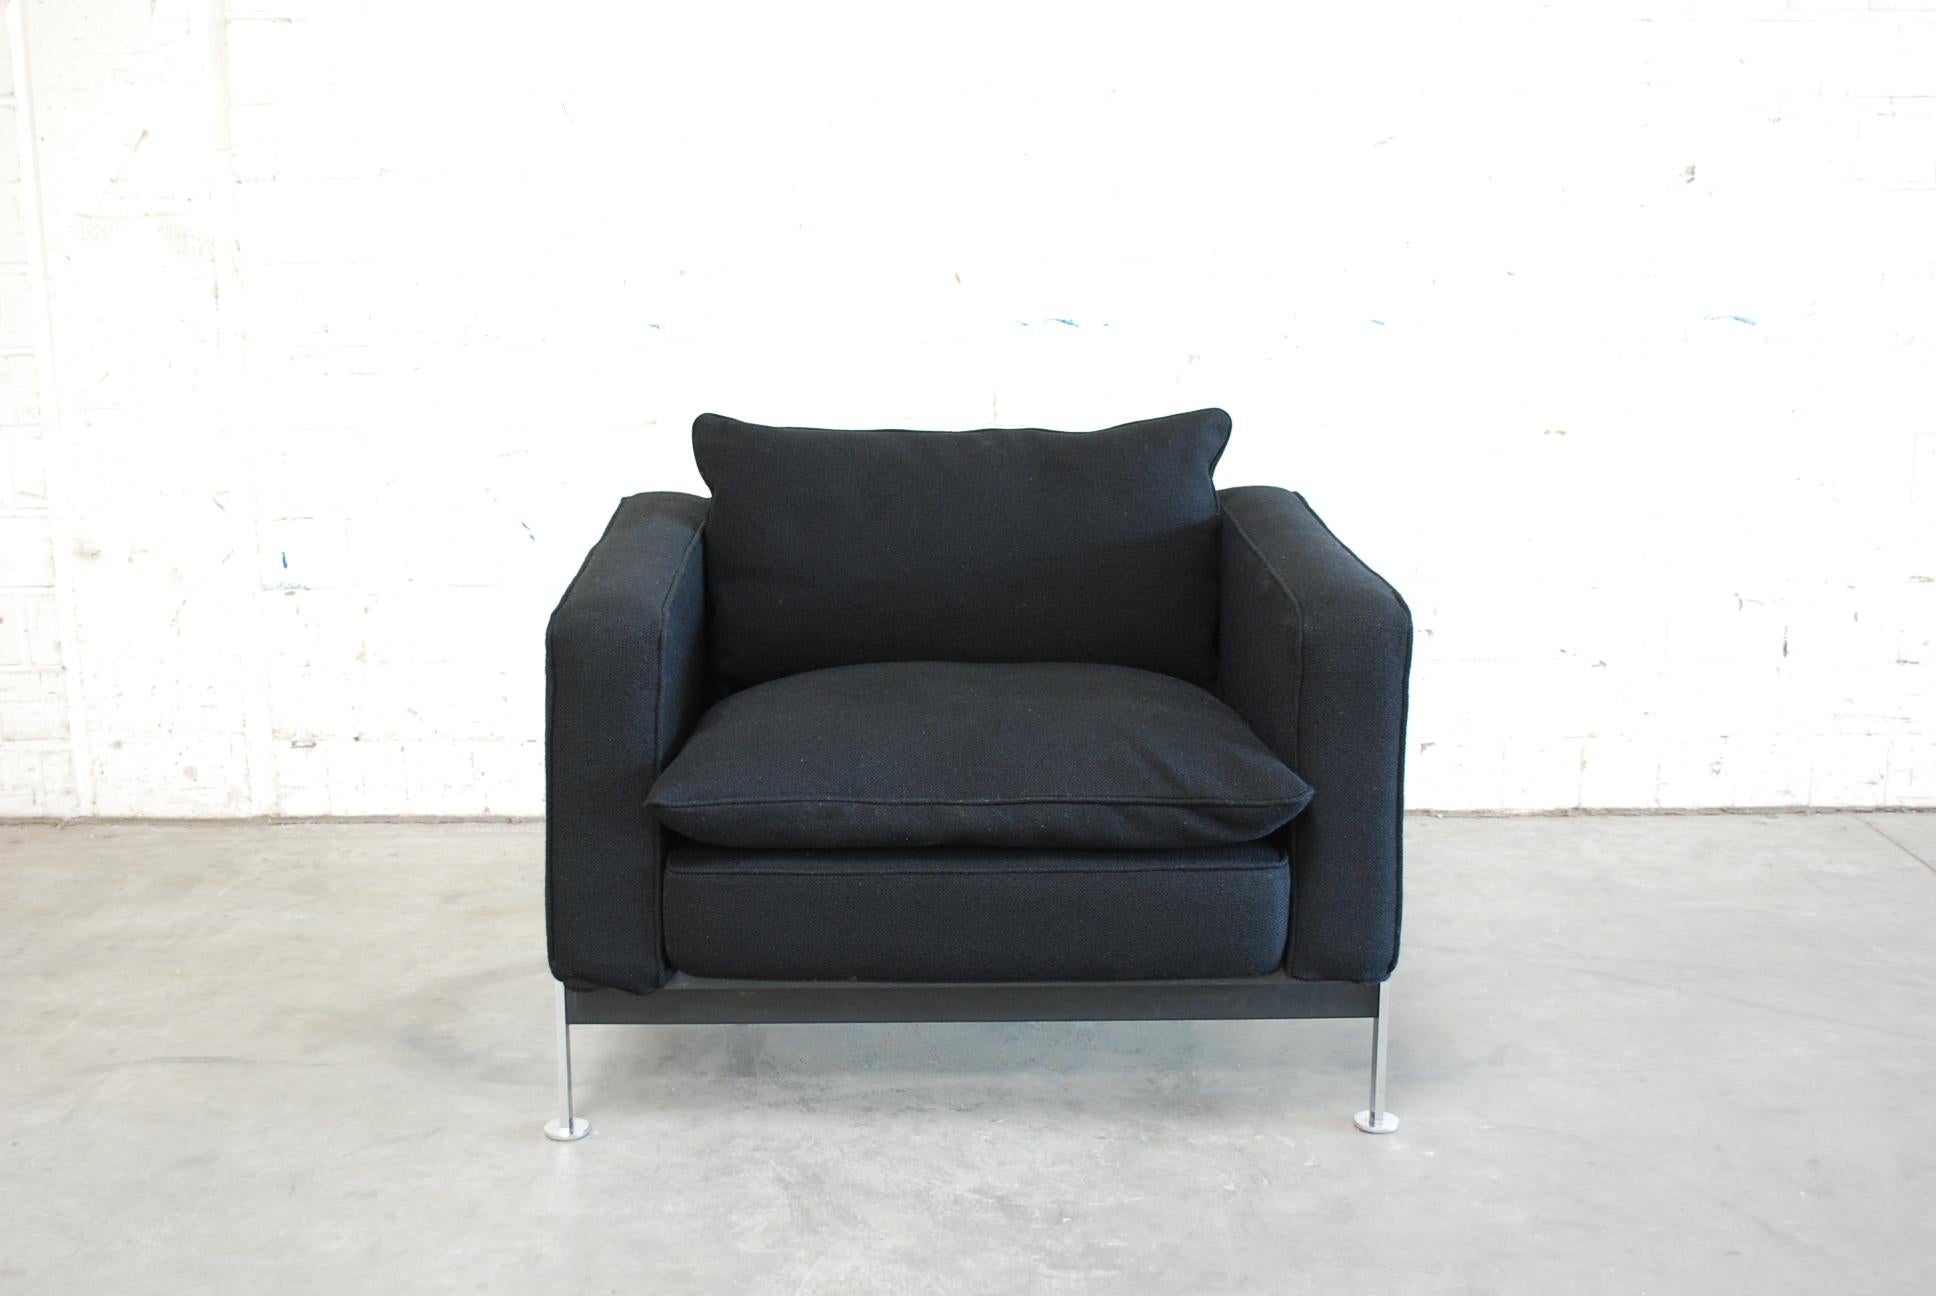 Robert Haussmann De Sede Rh 302 Sofa and Armchair Black For Sale 8